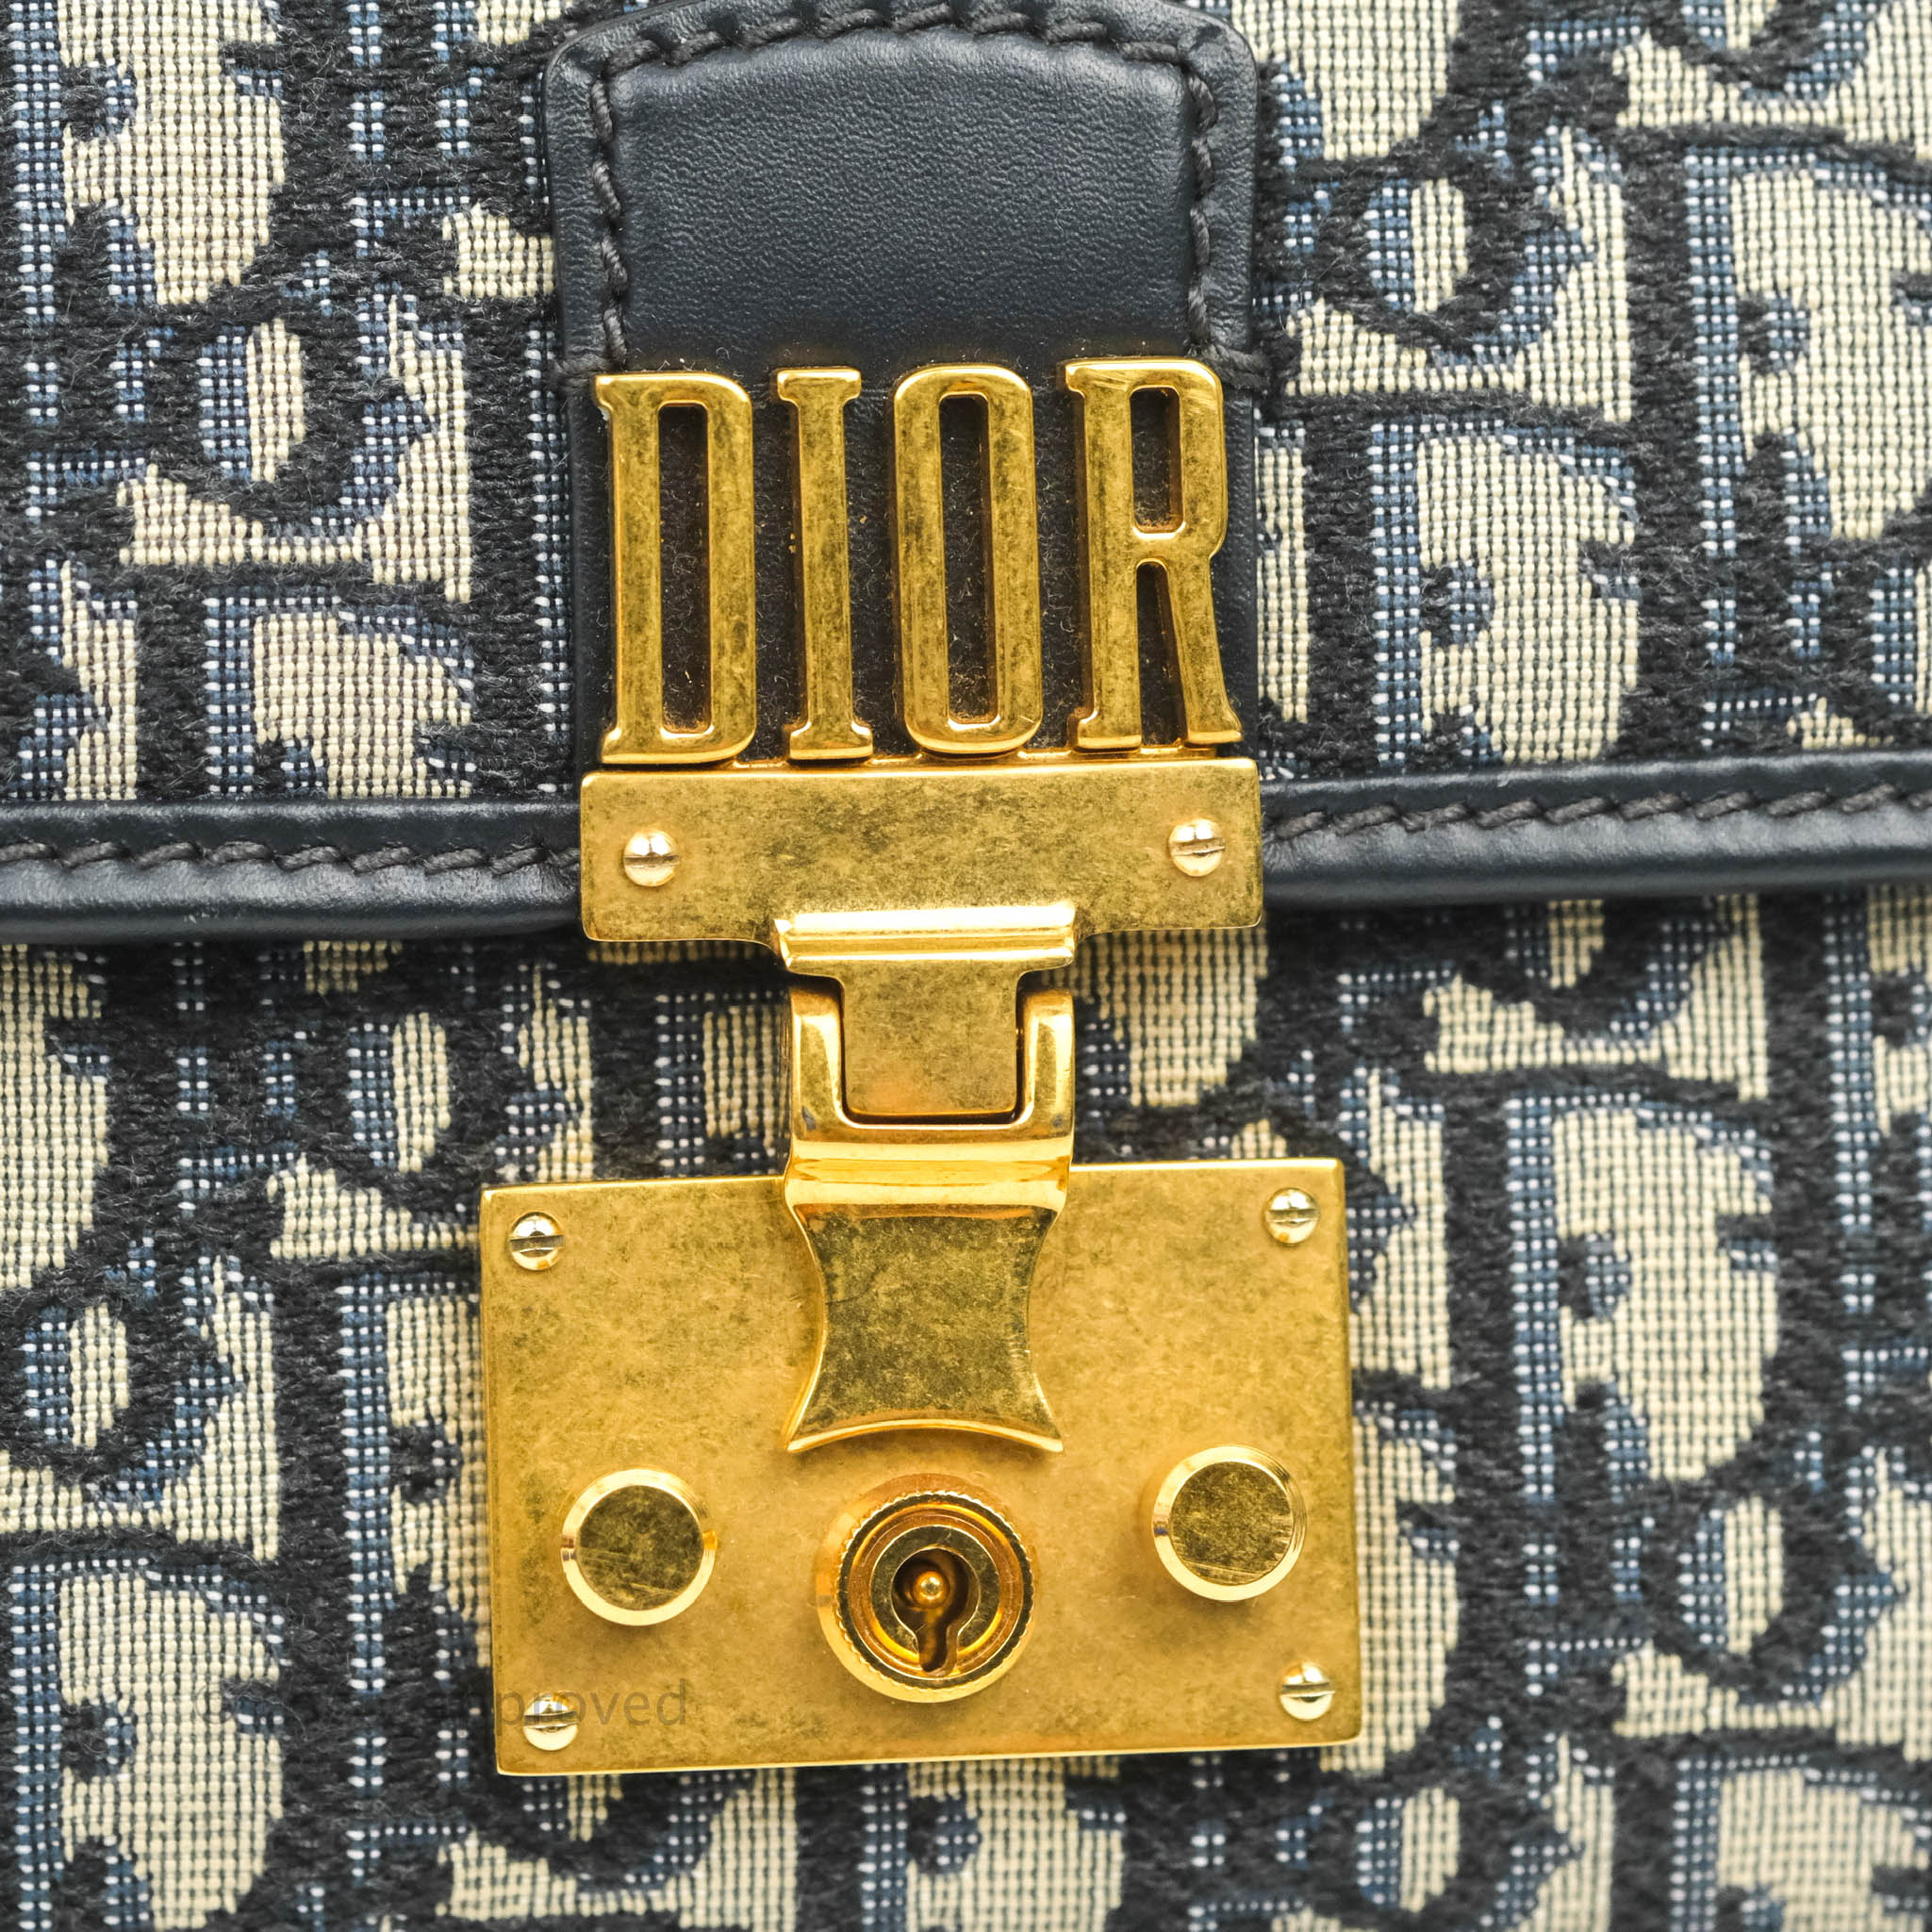 Dior Burgundy Oblique Canvas and Leather Dioraddict Flap Chain Bag Dior